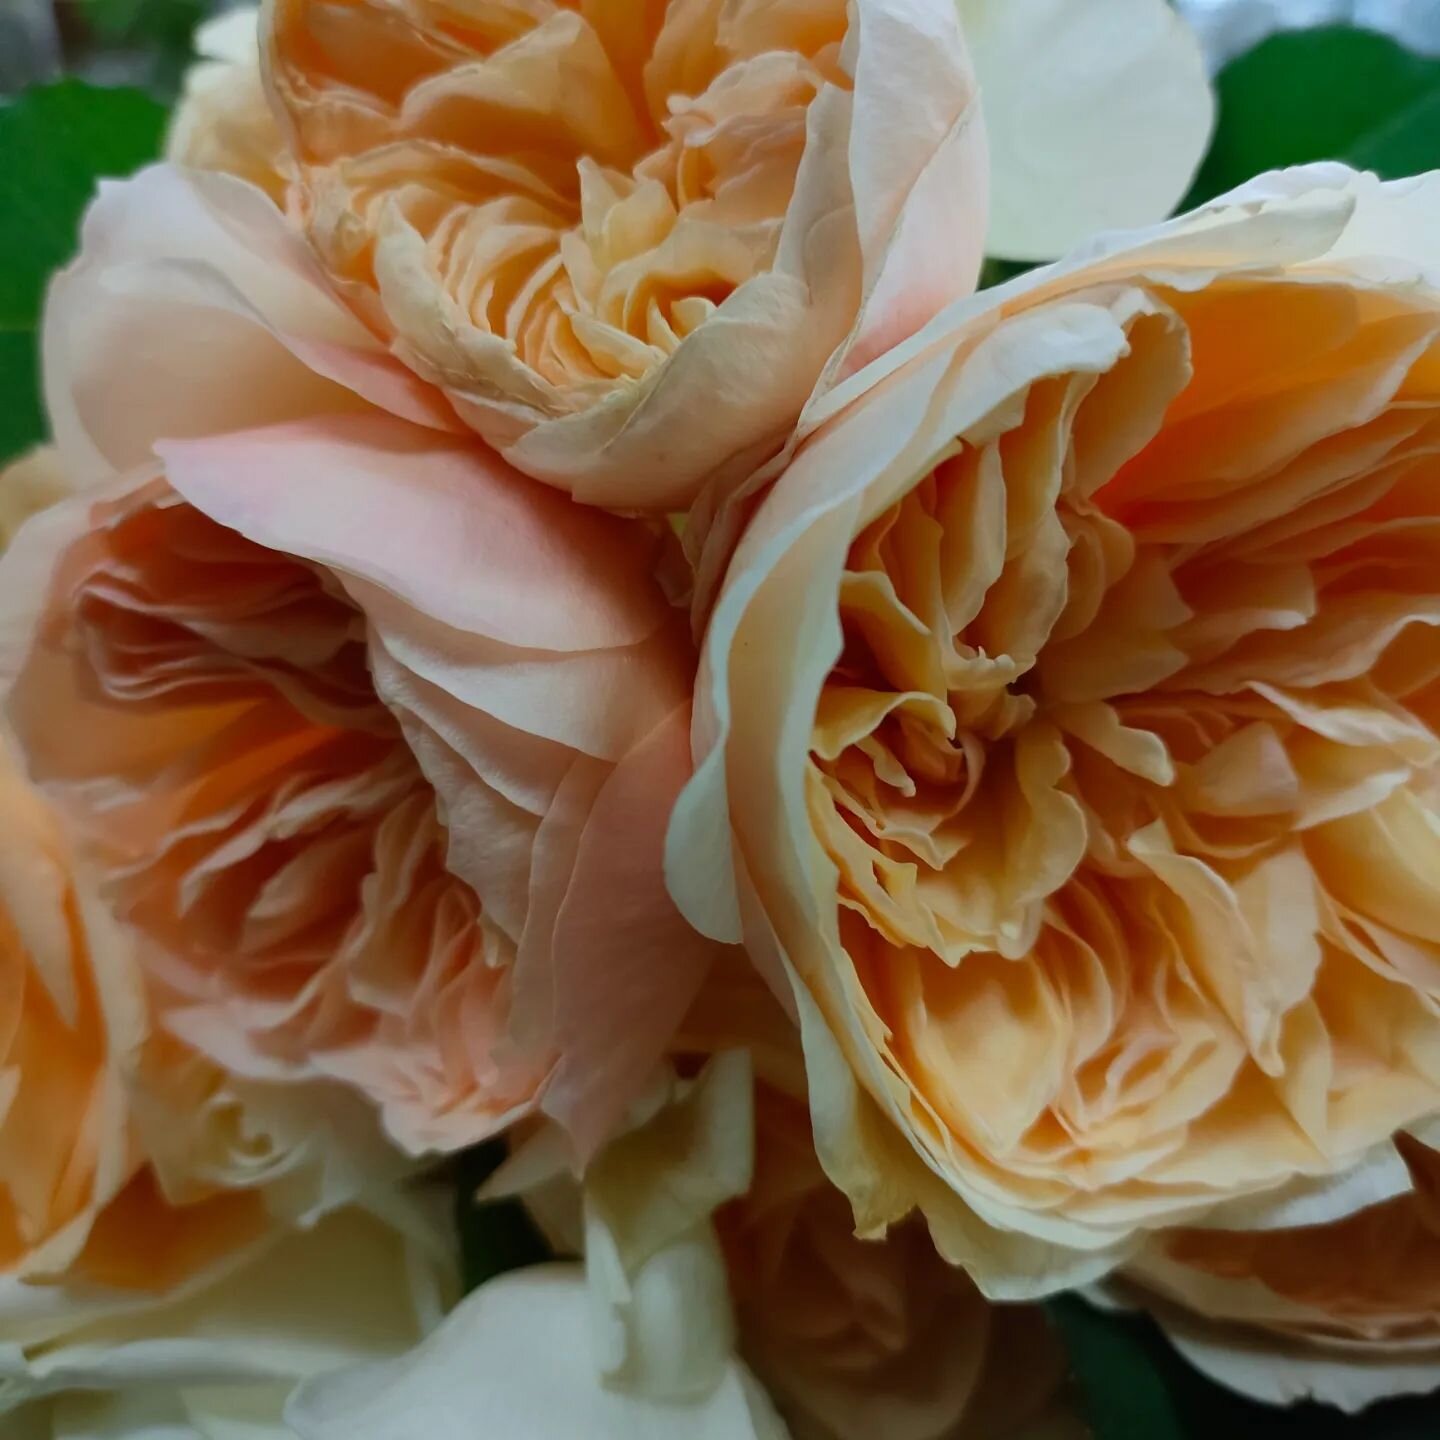 Beautiful David Austin roses for a Saturday 💕
#thevillageflorist #napierflorist 
#freshseasonalblooms #dailydelivery #interfloraflorist